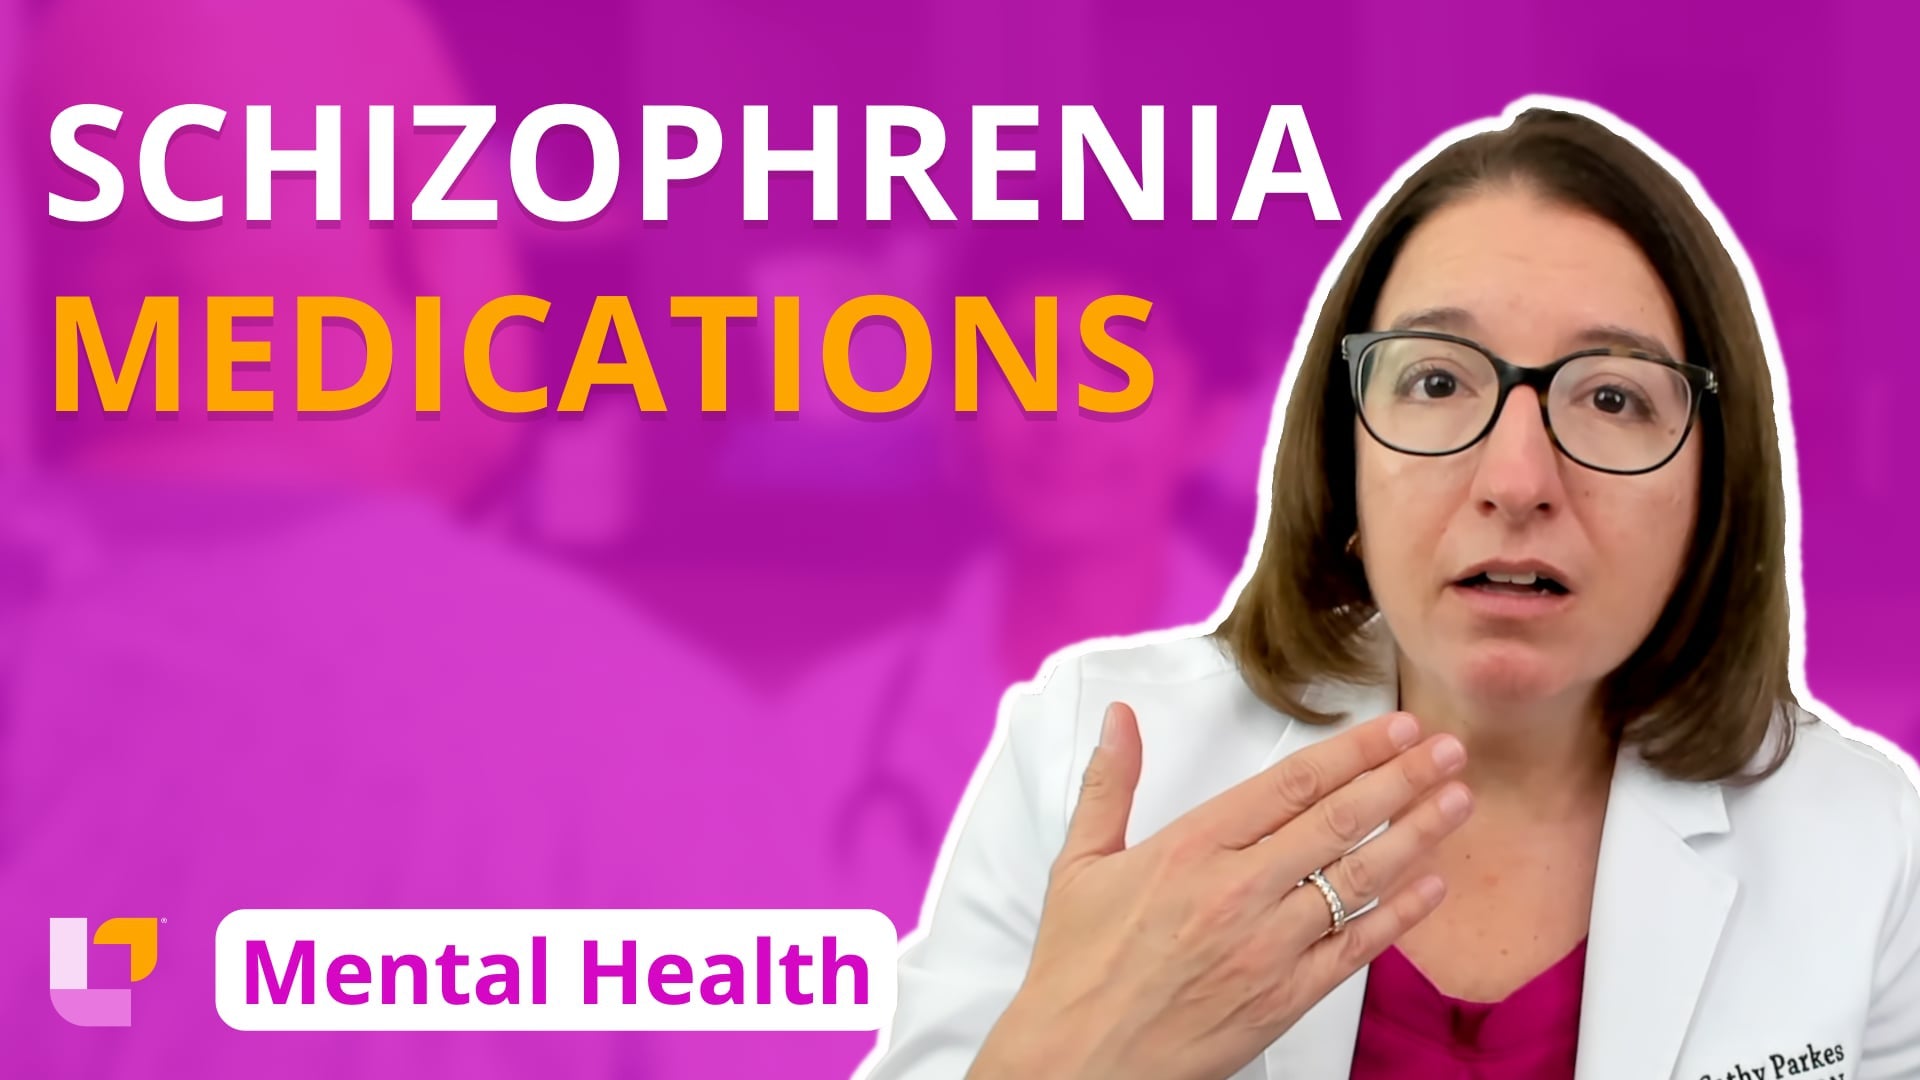 Psychiatric Mental Health, part 23: Therapies - Medications for Schizophrenia - LevelUpRN